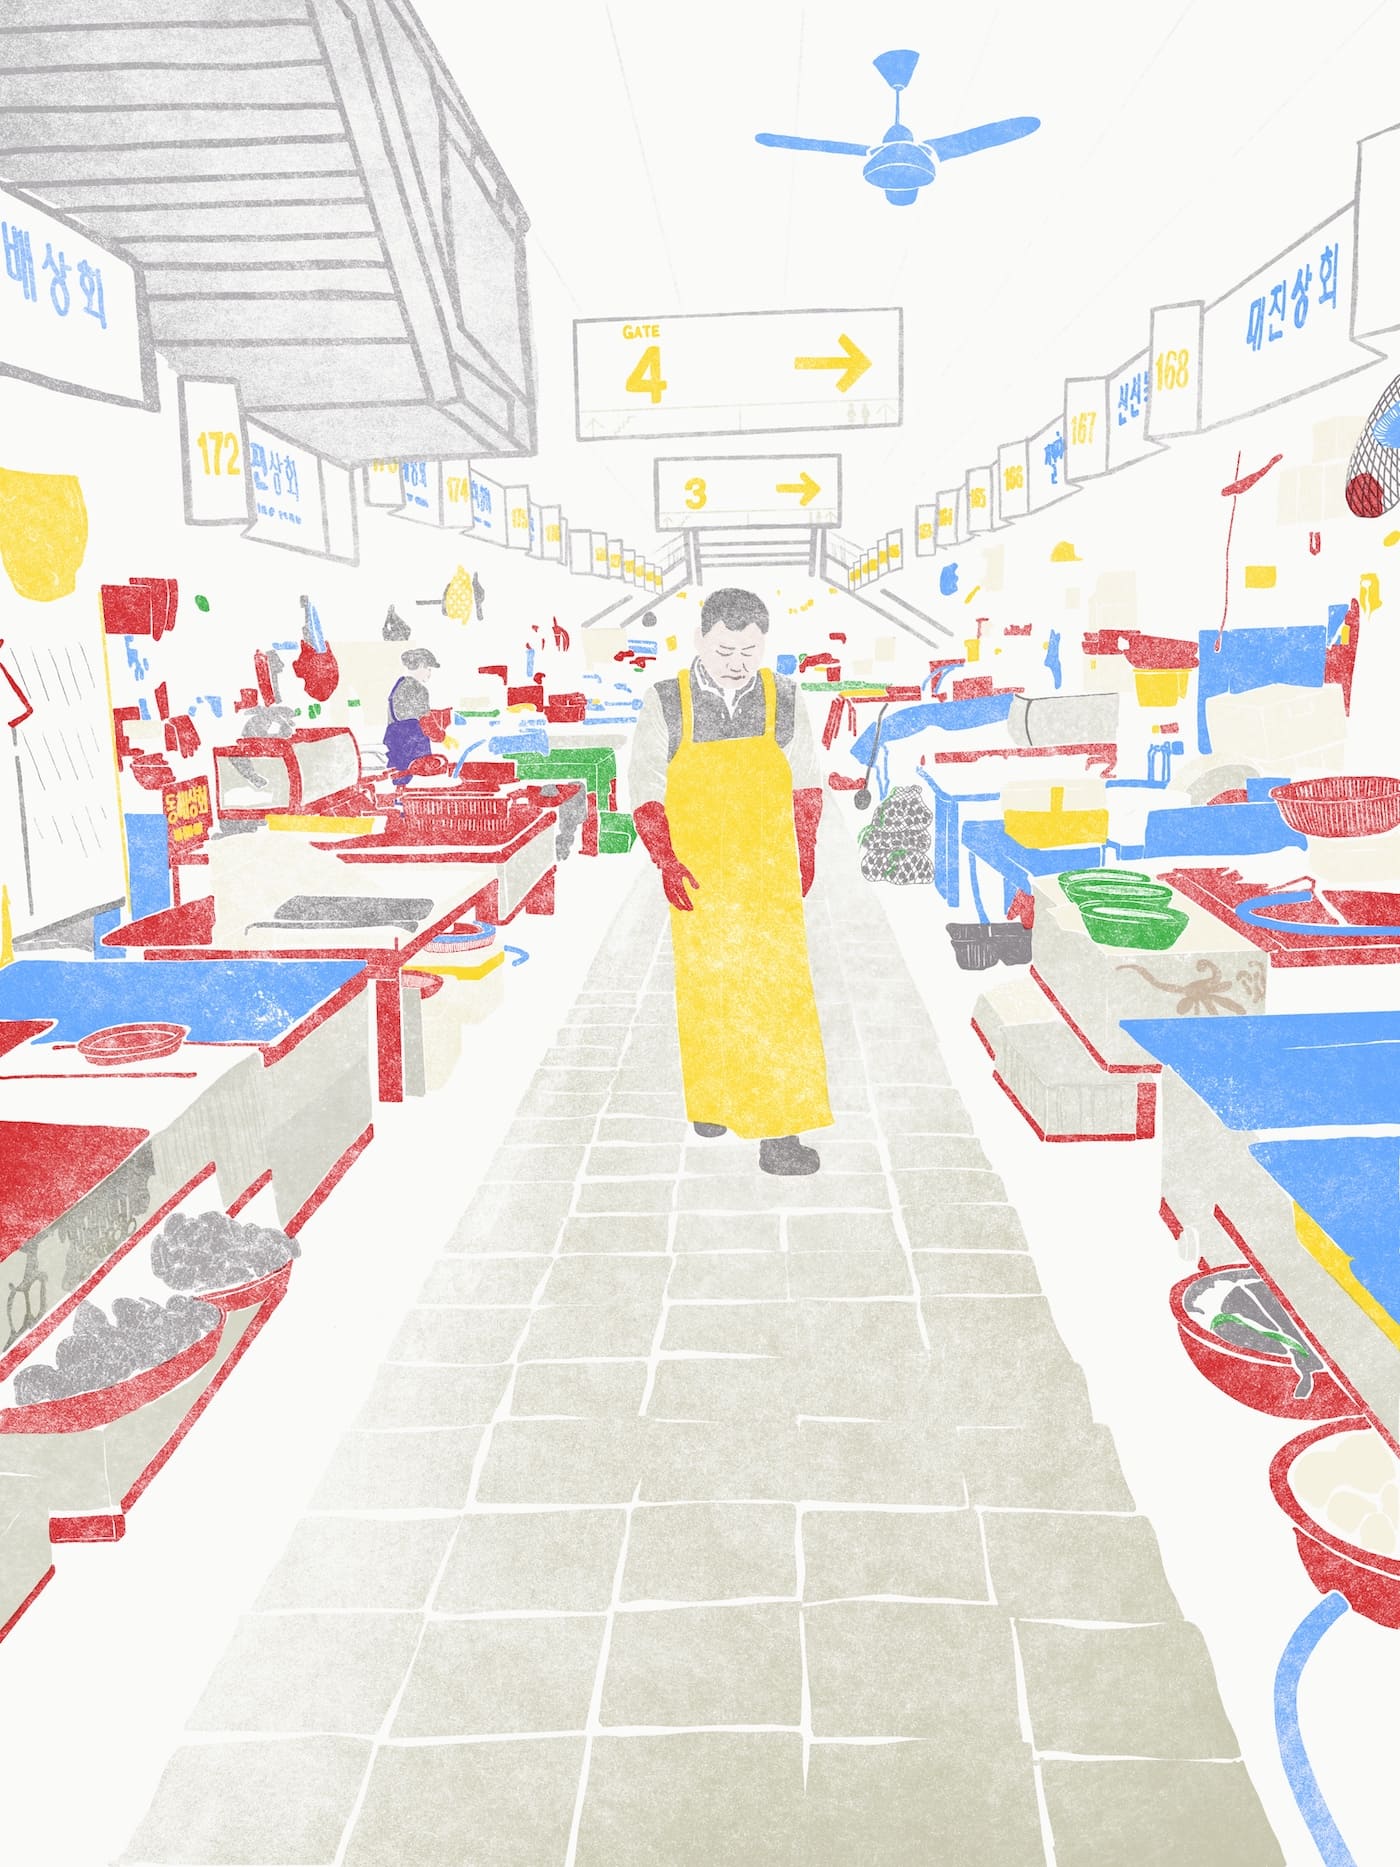 Digital illustration of the fish market in Busan